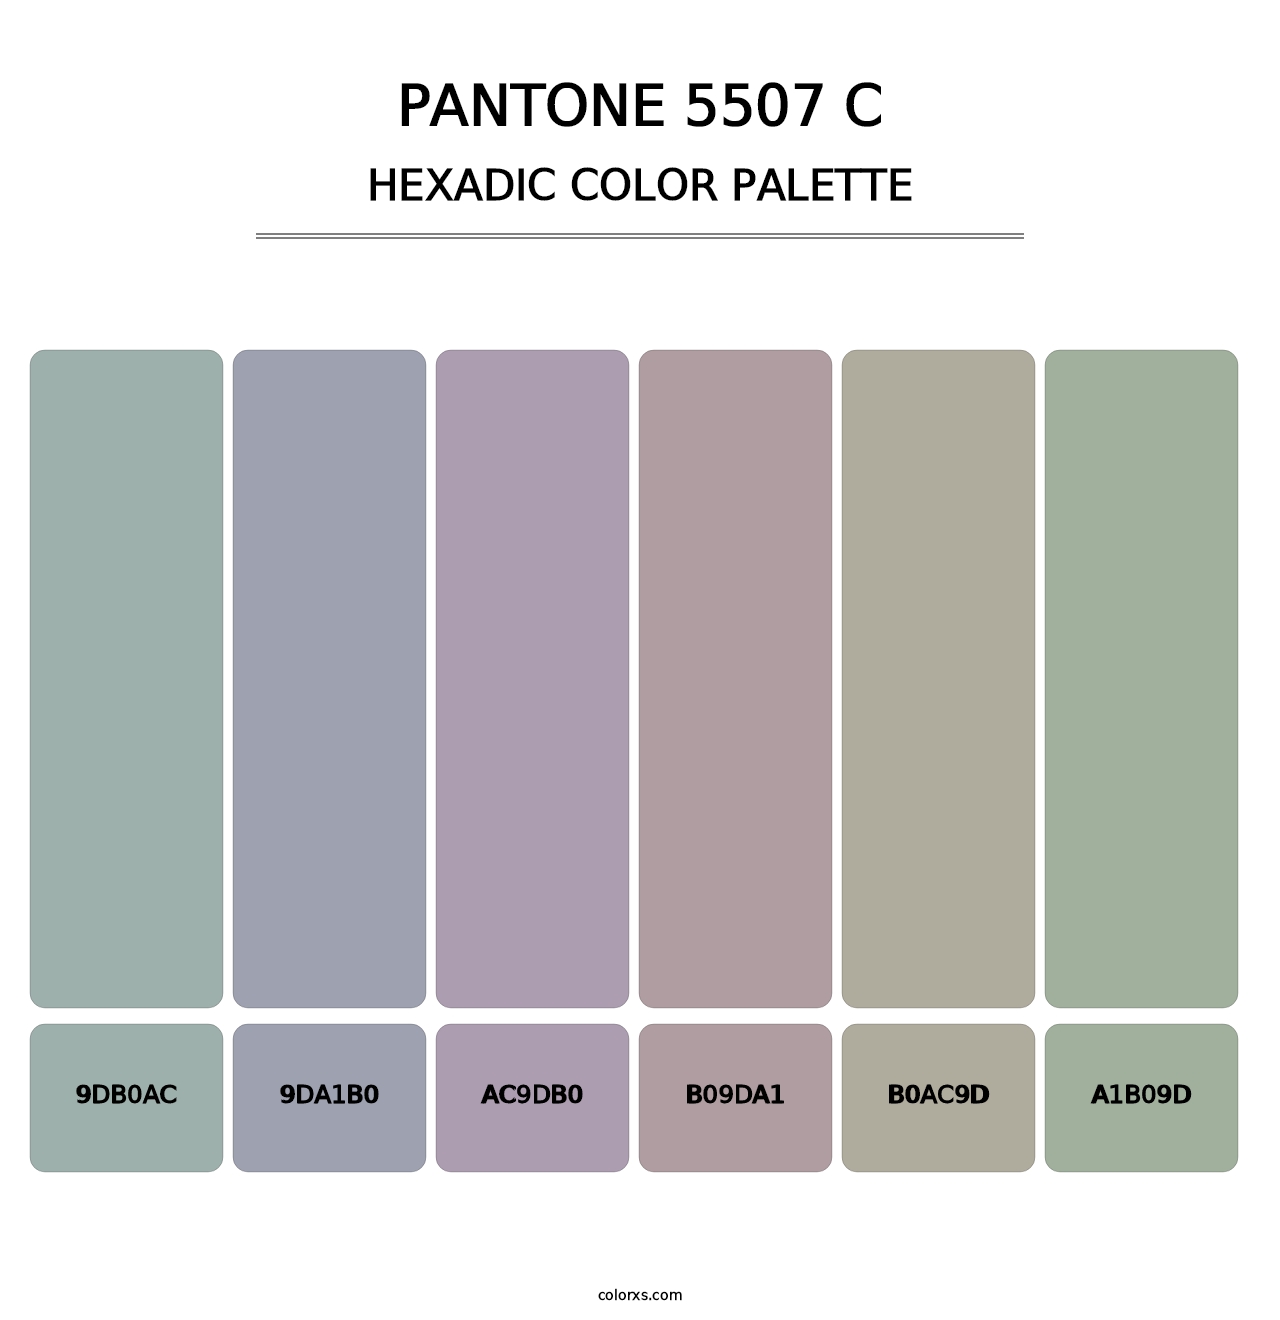 PANTONE 5507 C - Hexadic Color Palette